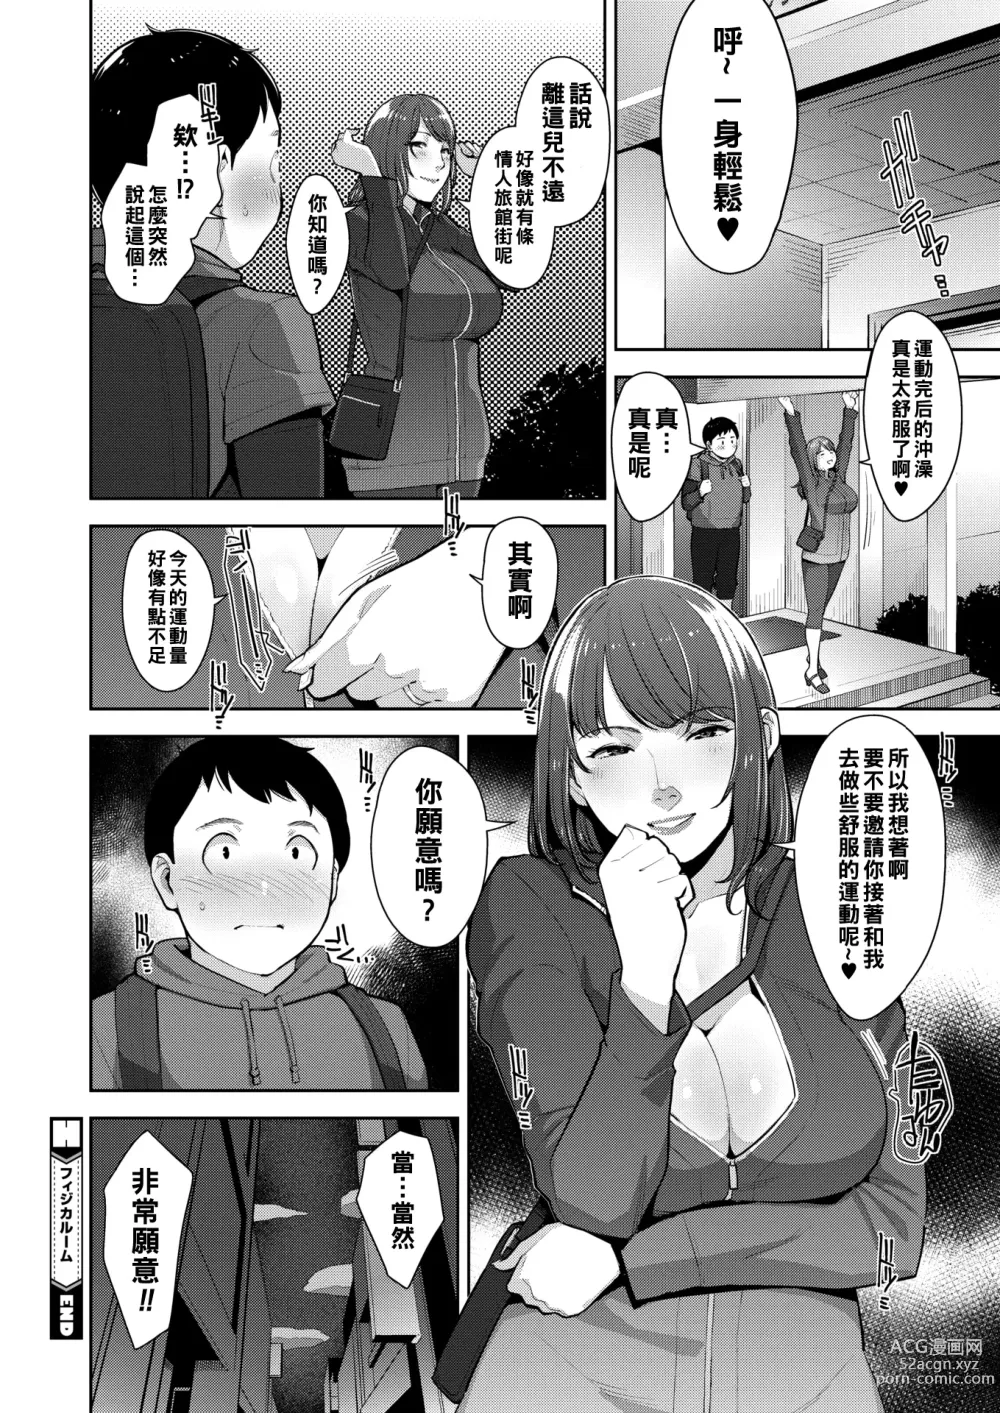 Page 24 of manga PHYSICAROOM